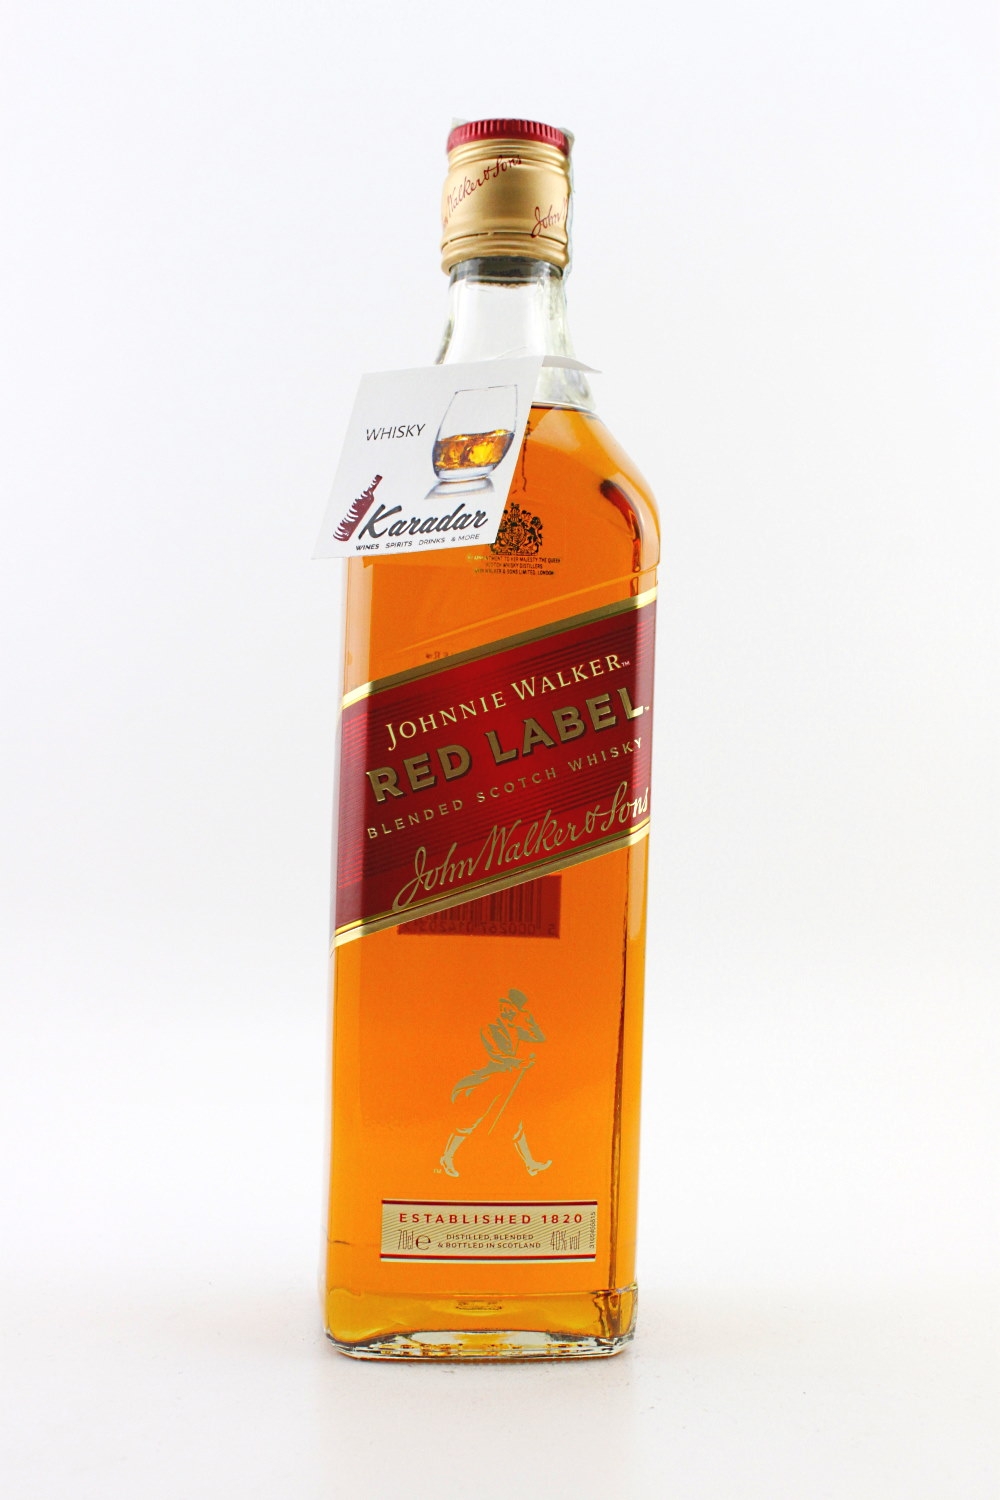 Walker Red 40% Label Speyside Whisky Johnnie vol.